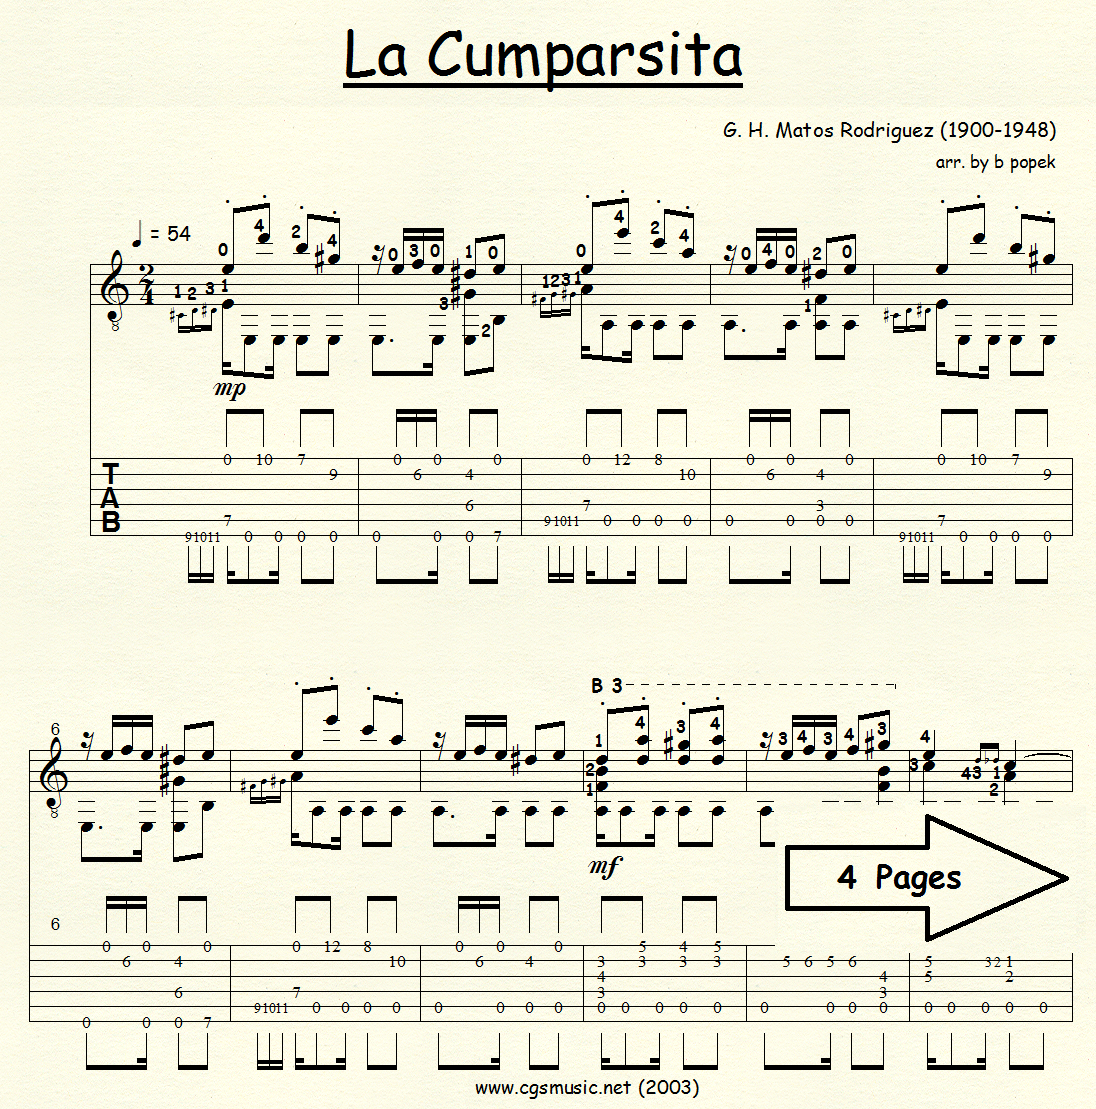 La Cumparsita (Rodriguez) for Classical Guitar in Tablature